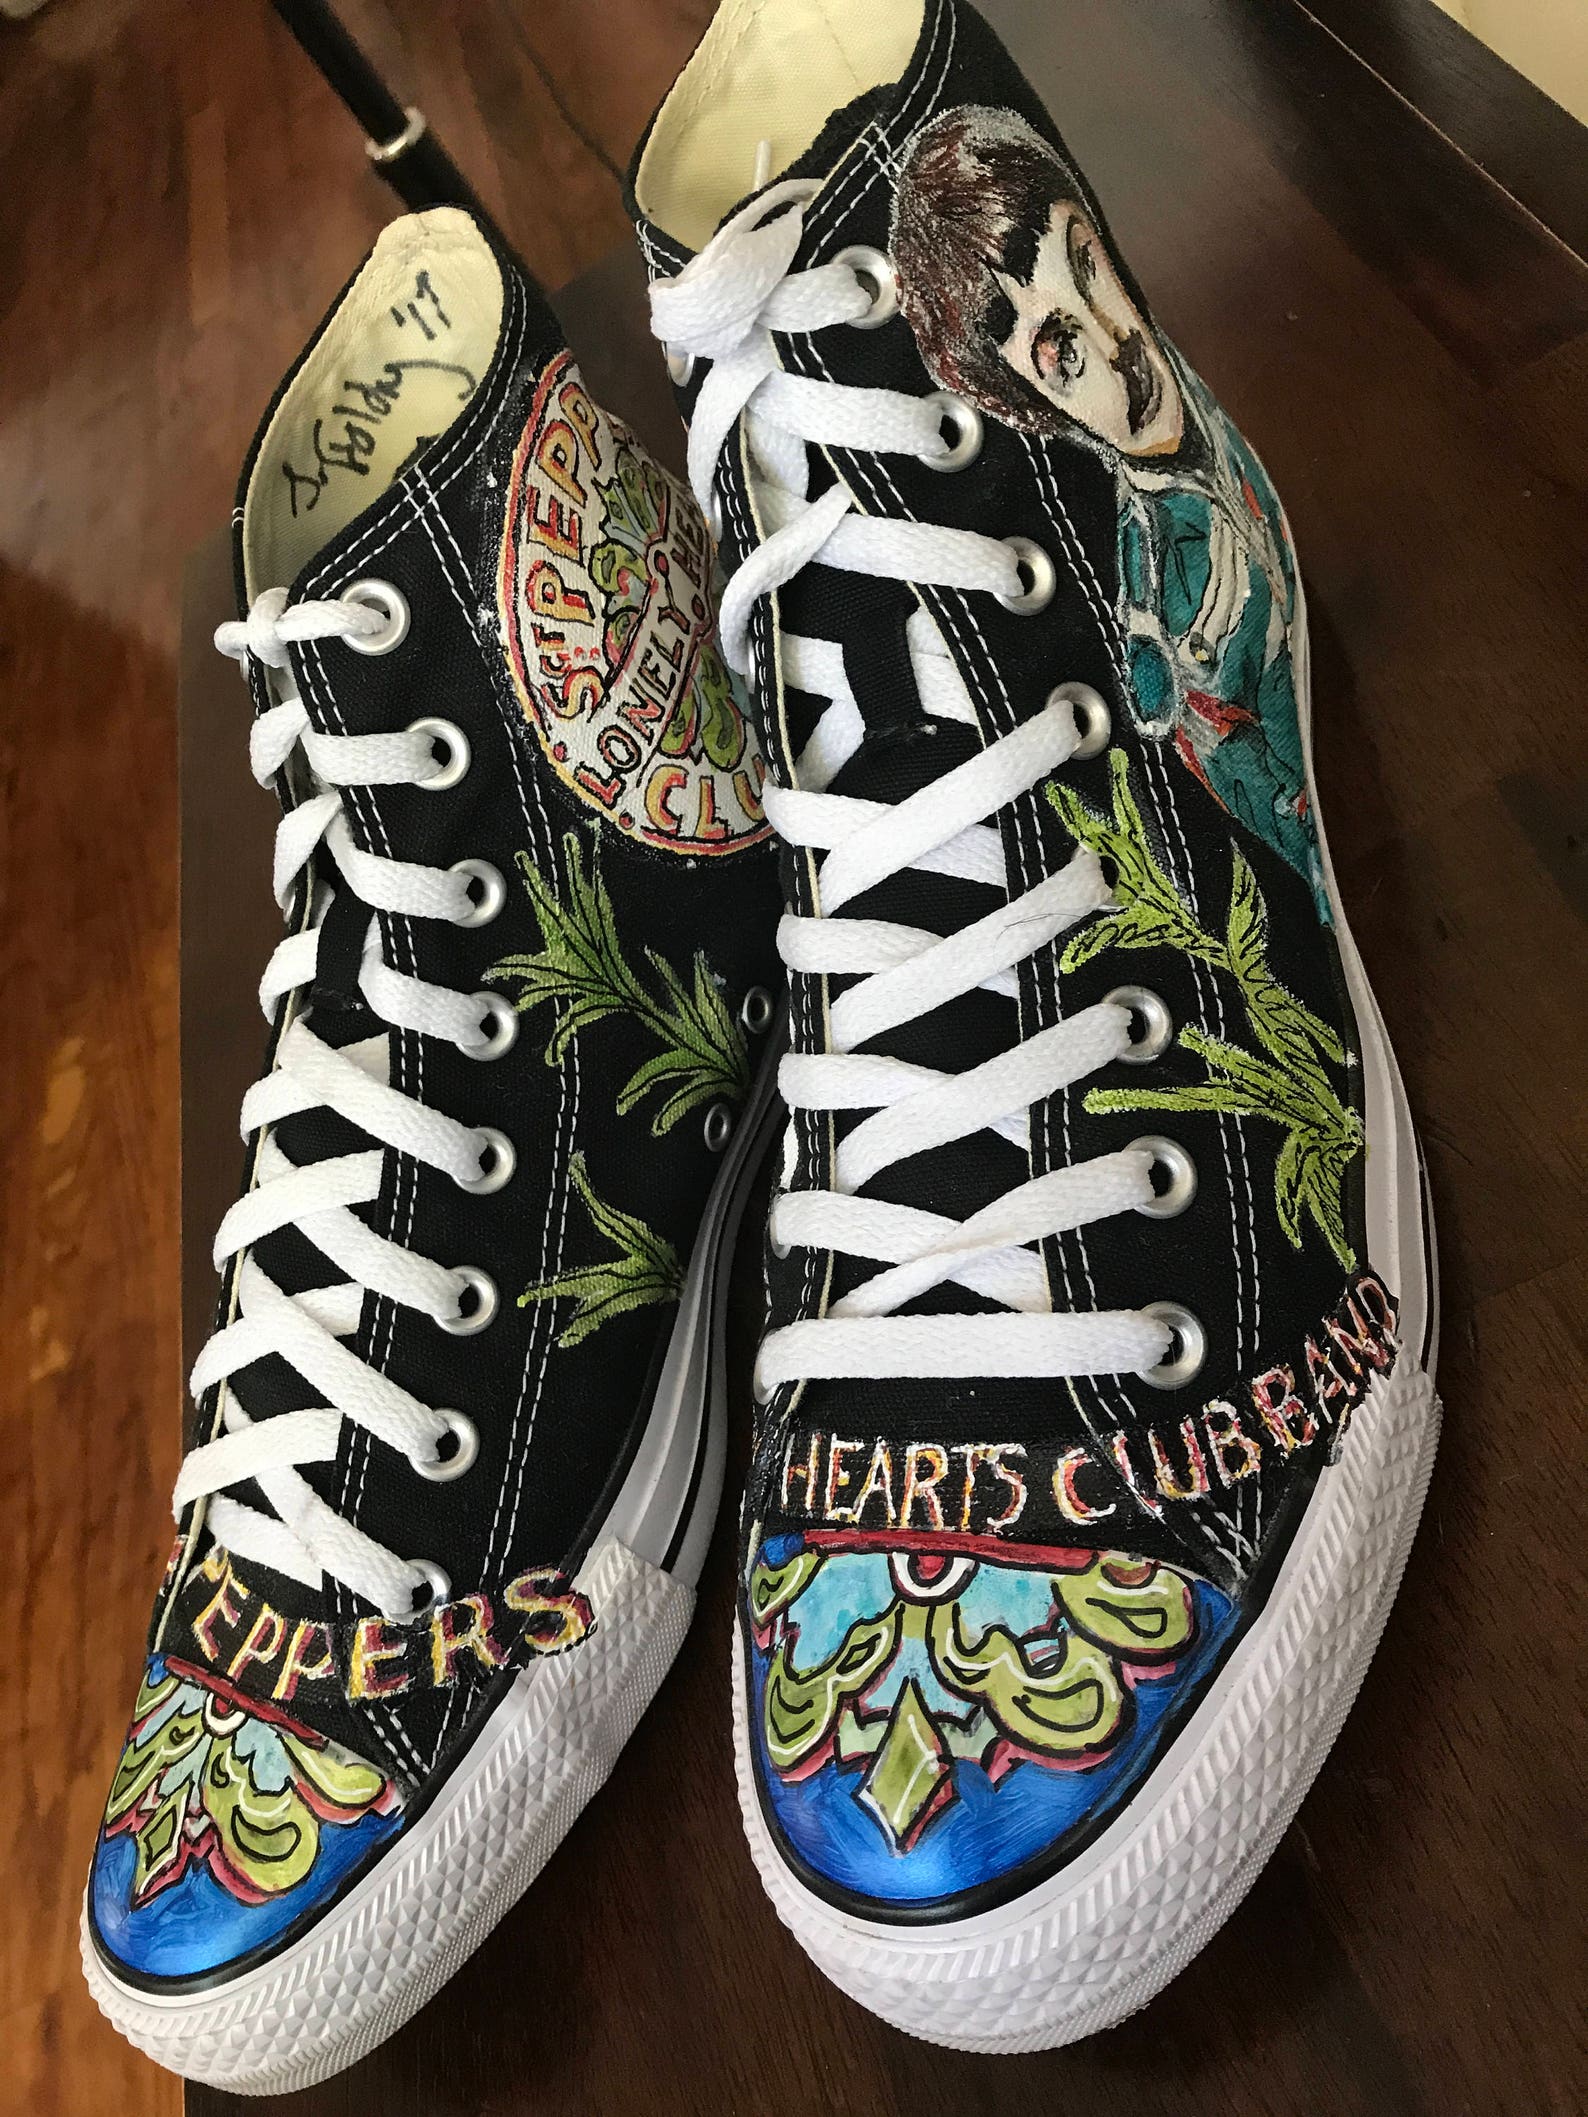 Beatles Sgt. Pepper converse handprinted shoes. | Etsy